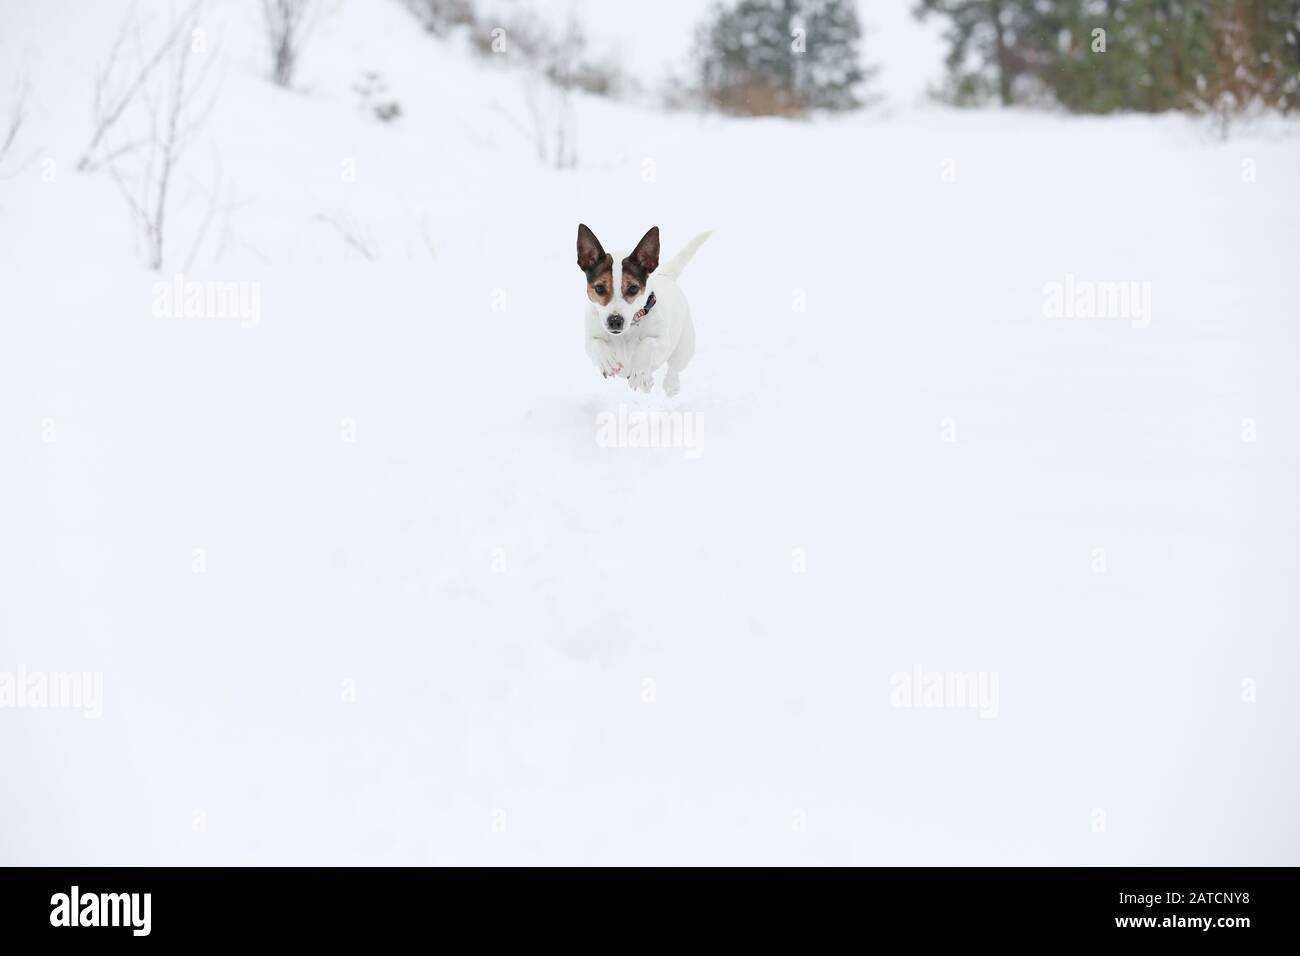 Jack Russell Terrier dog running through deep snow Stock Photo